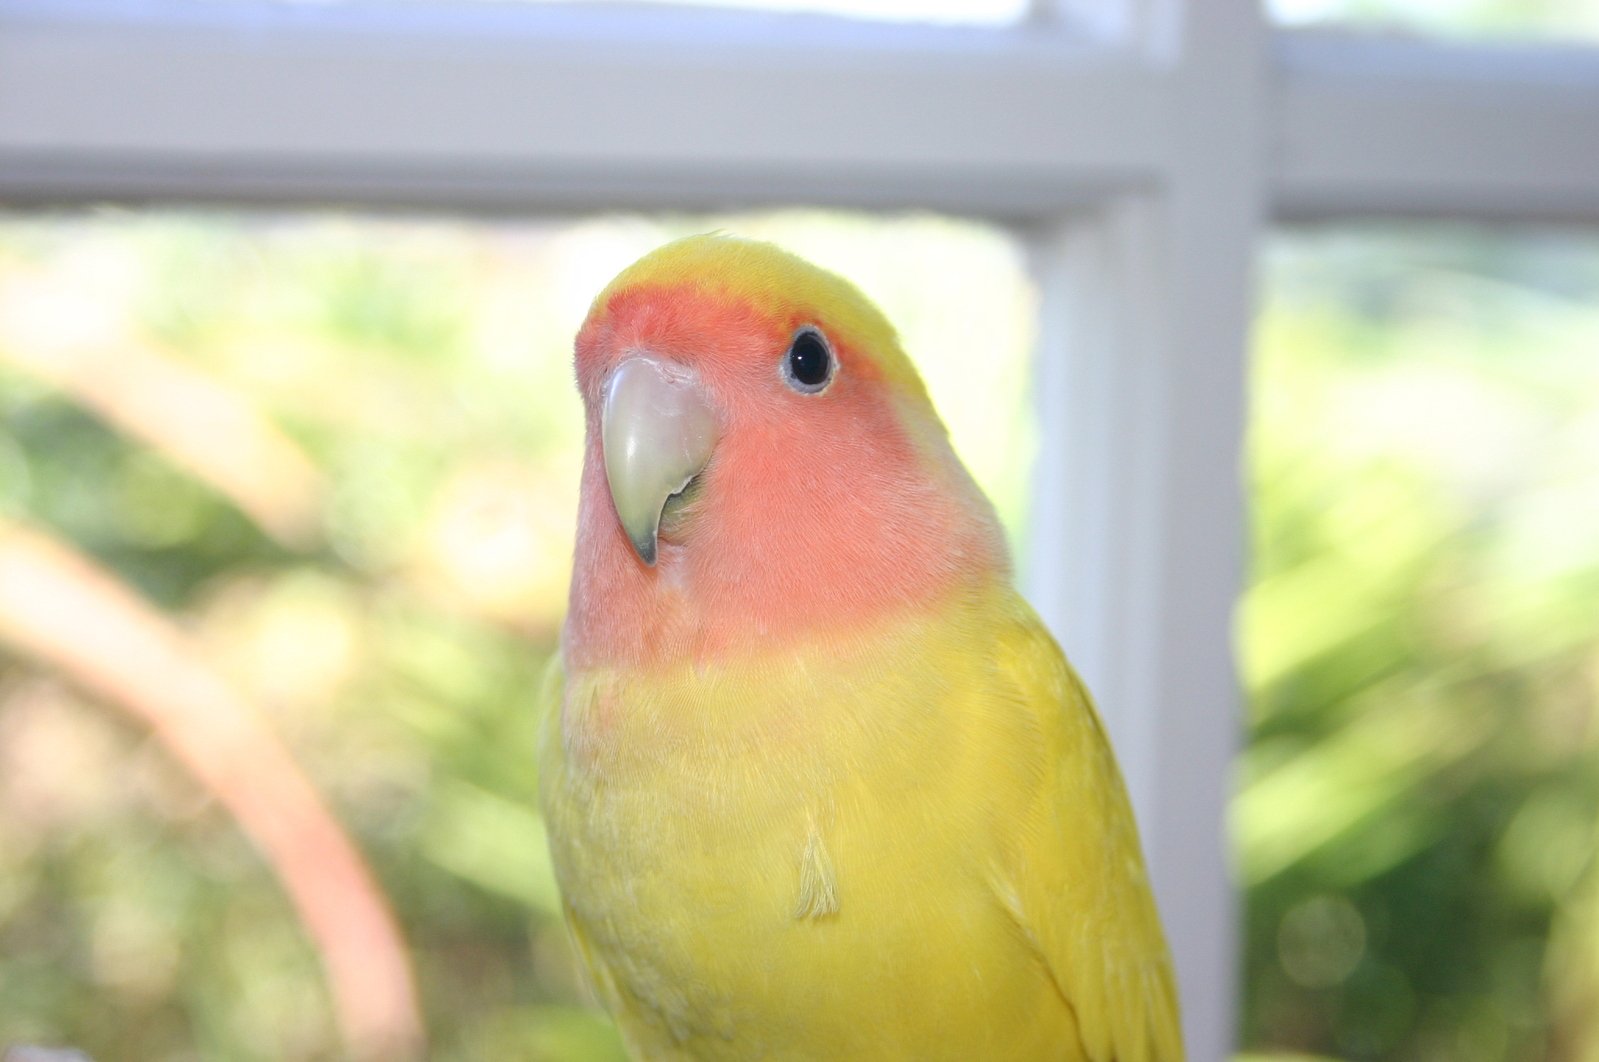 an orange - faced parakeet sits on its perch near a window